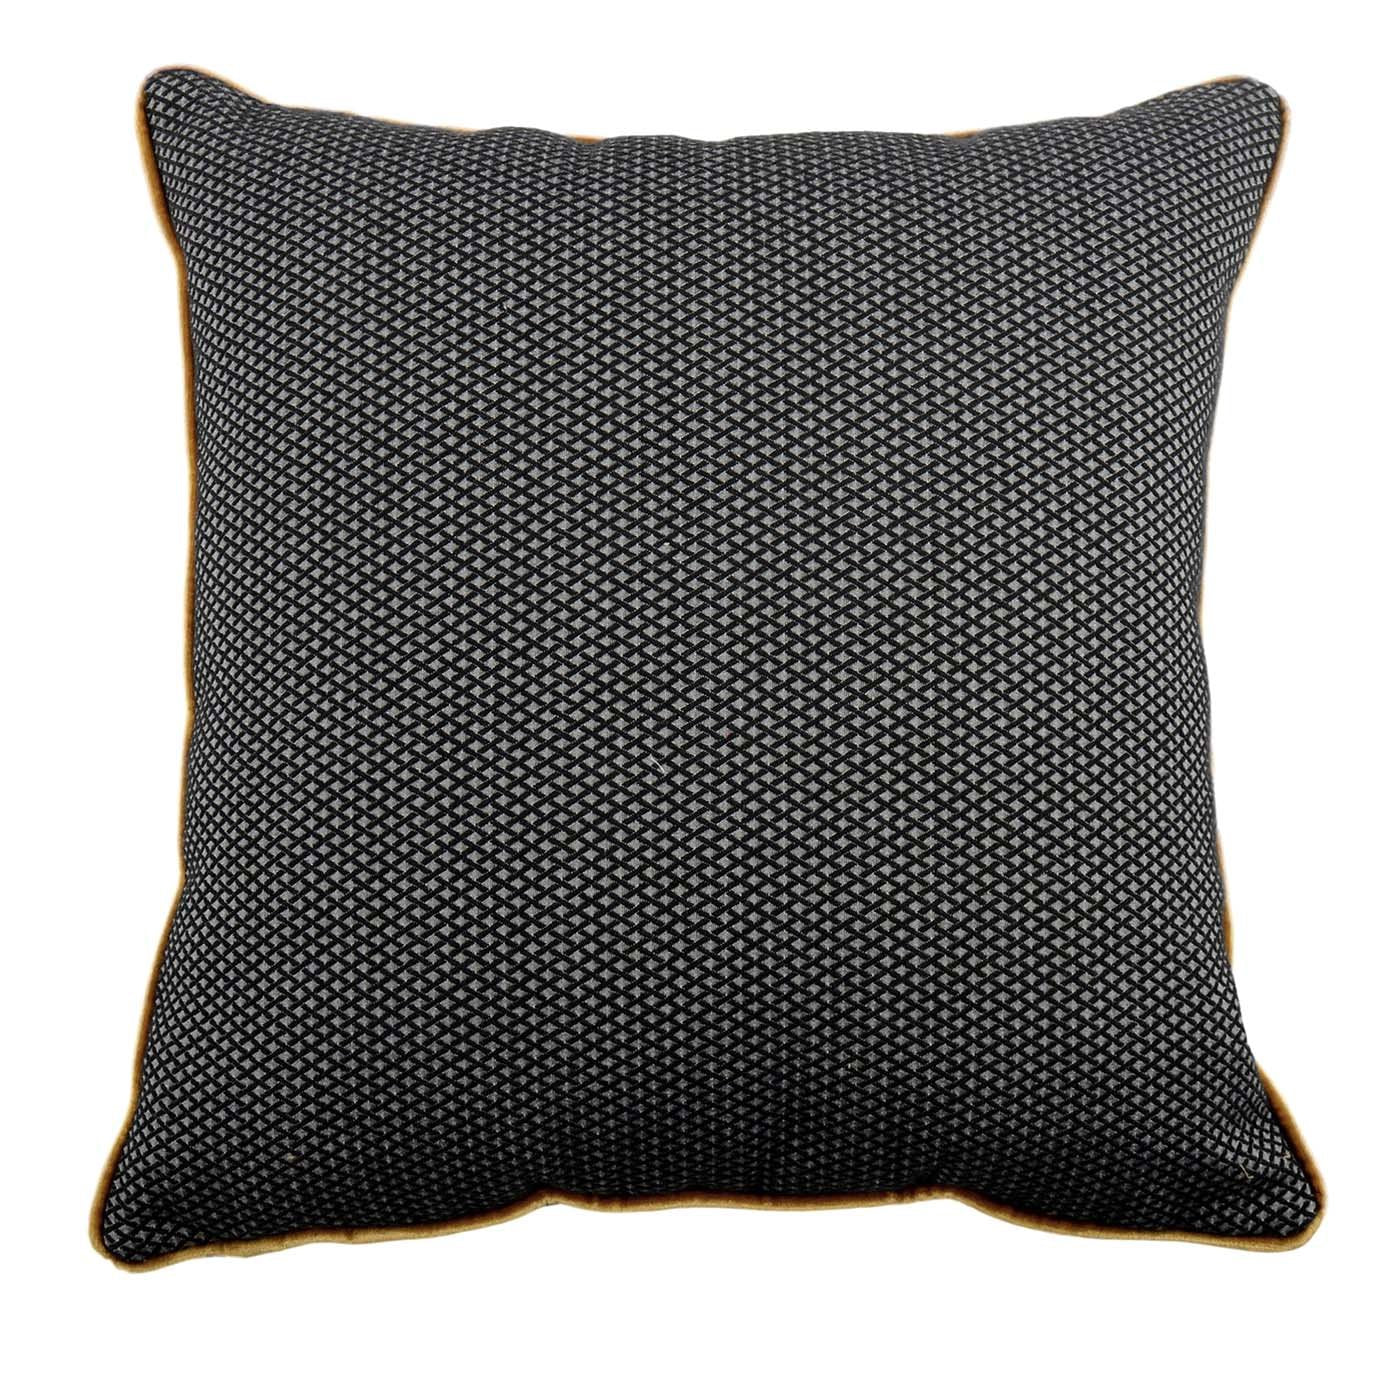 Black Grey Carré Cushion in false unit jacquard fabric - Main view